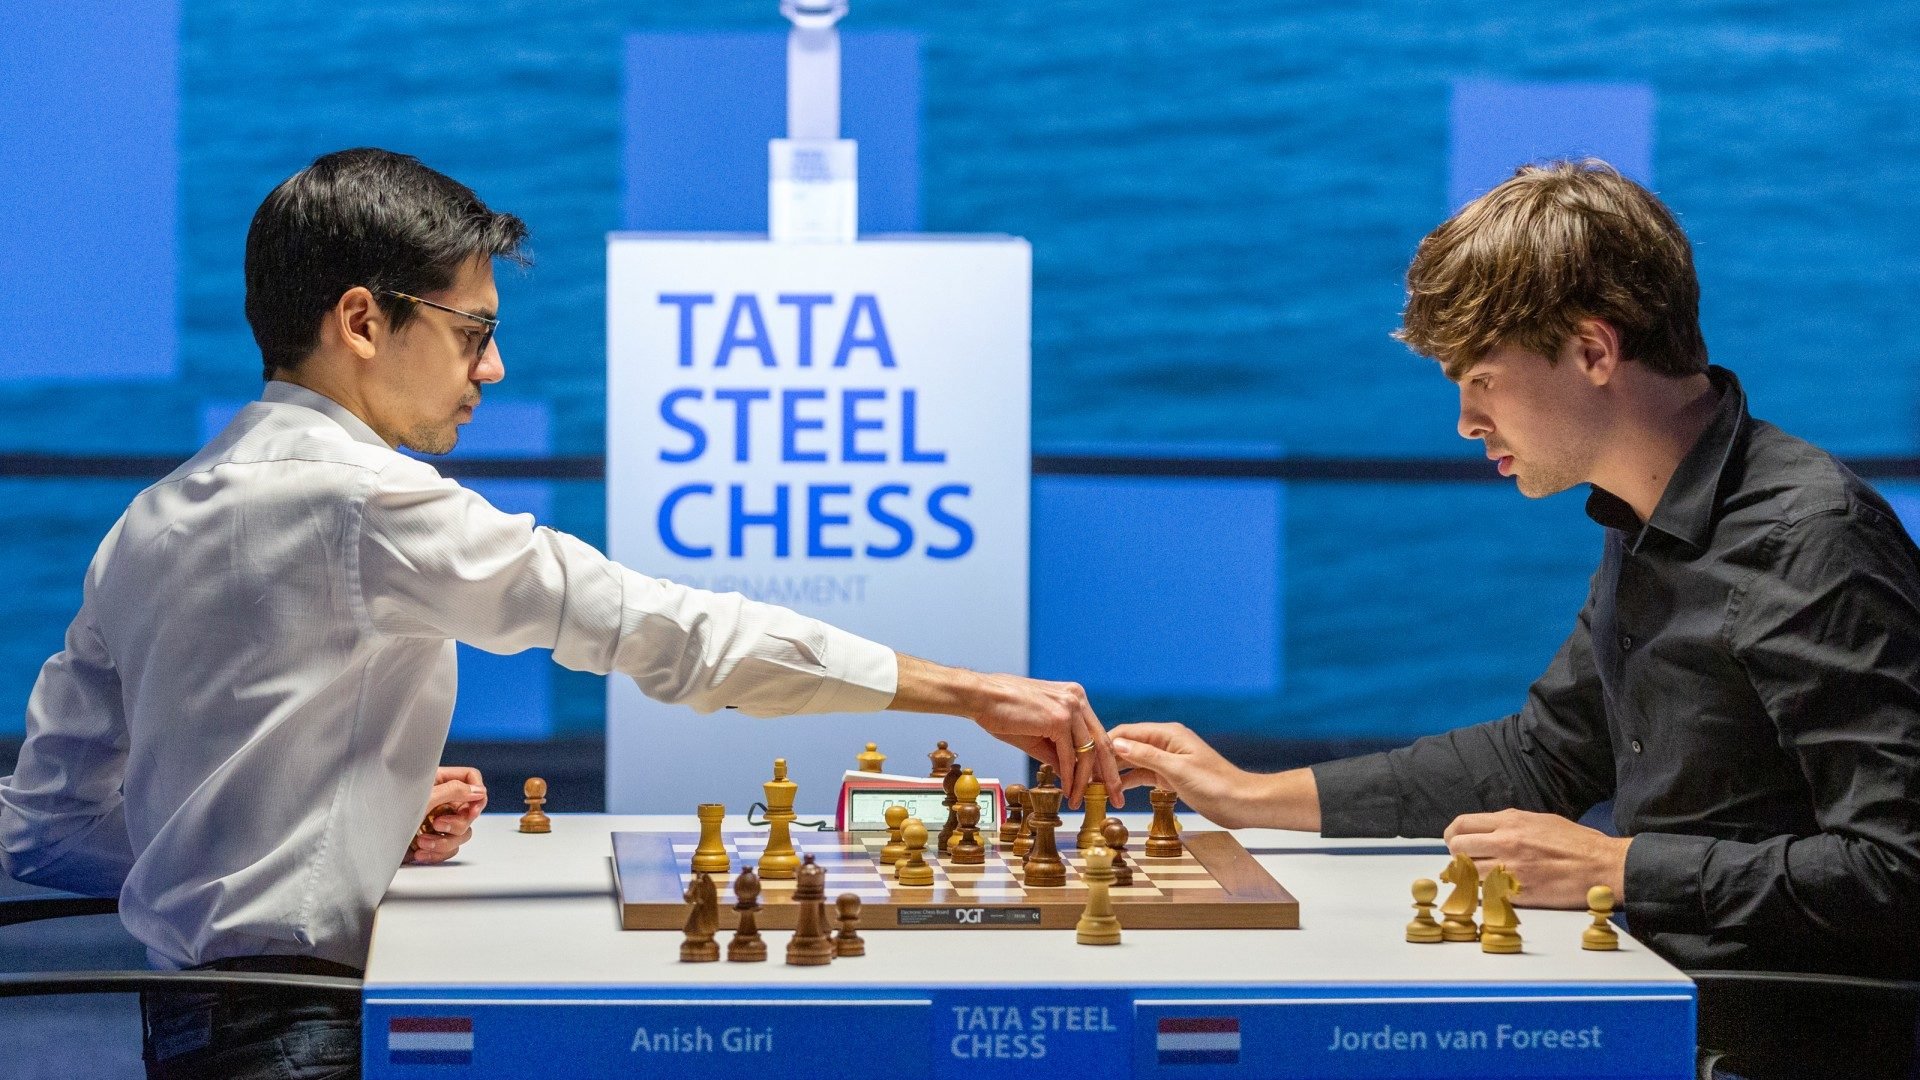 Tata Steel Chess Tournament 2024 - Schach-Ticker